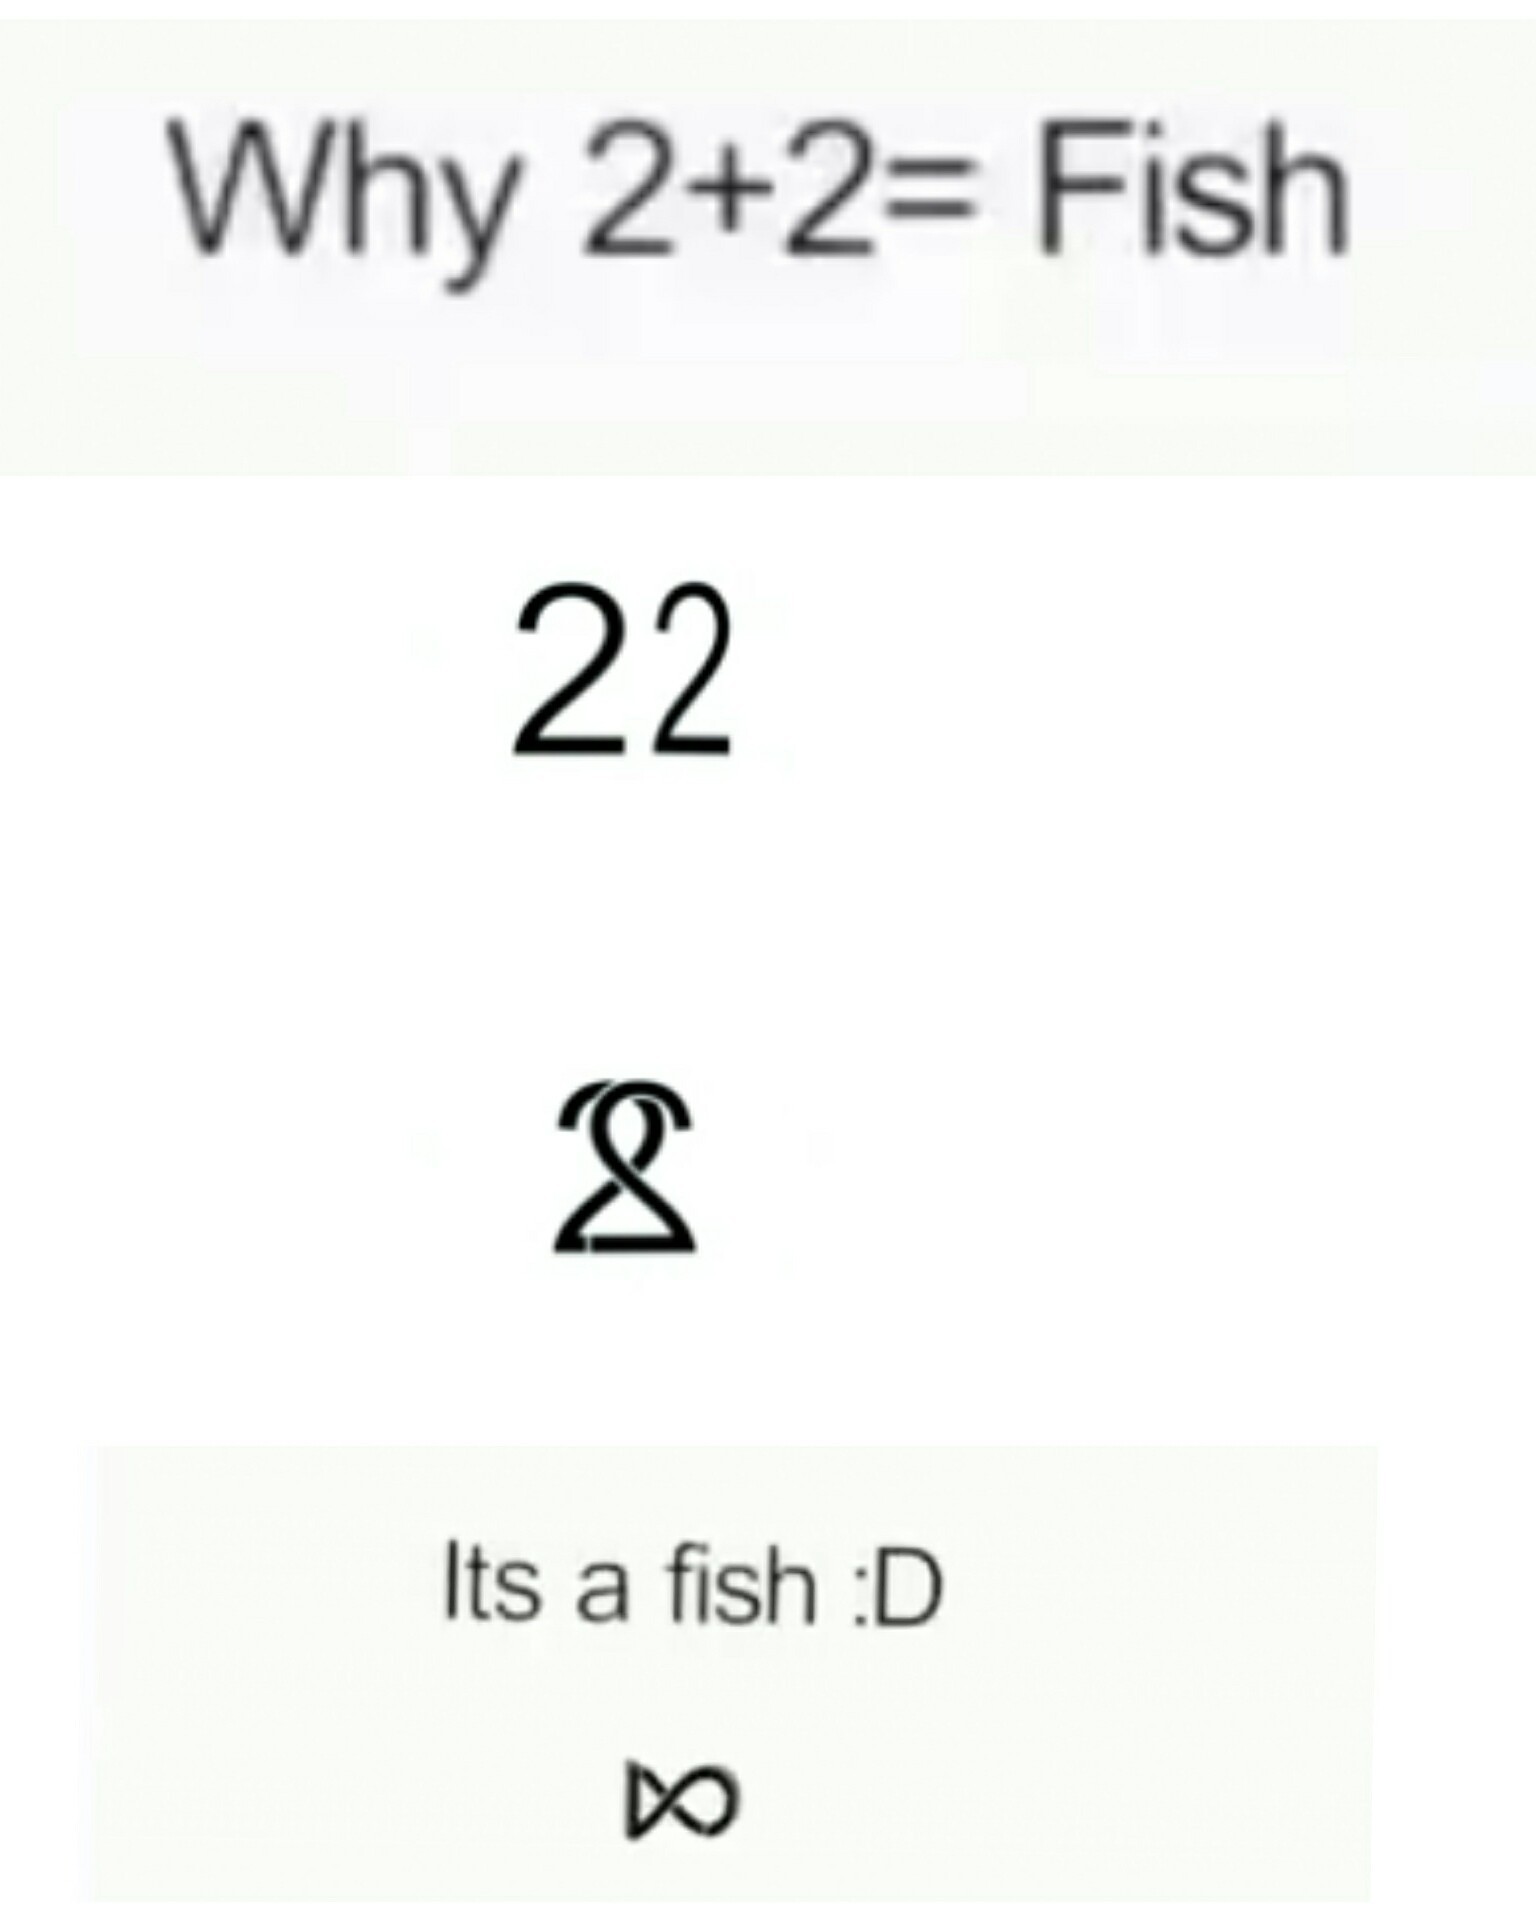 2+2=Fish - meme